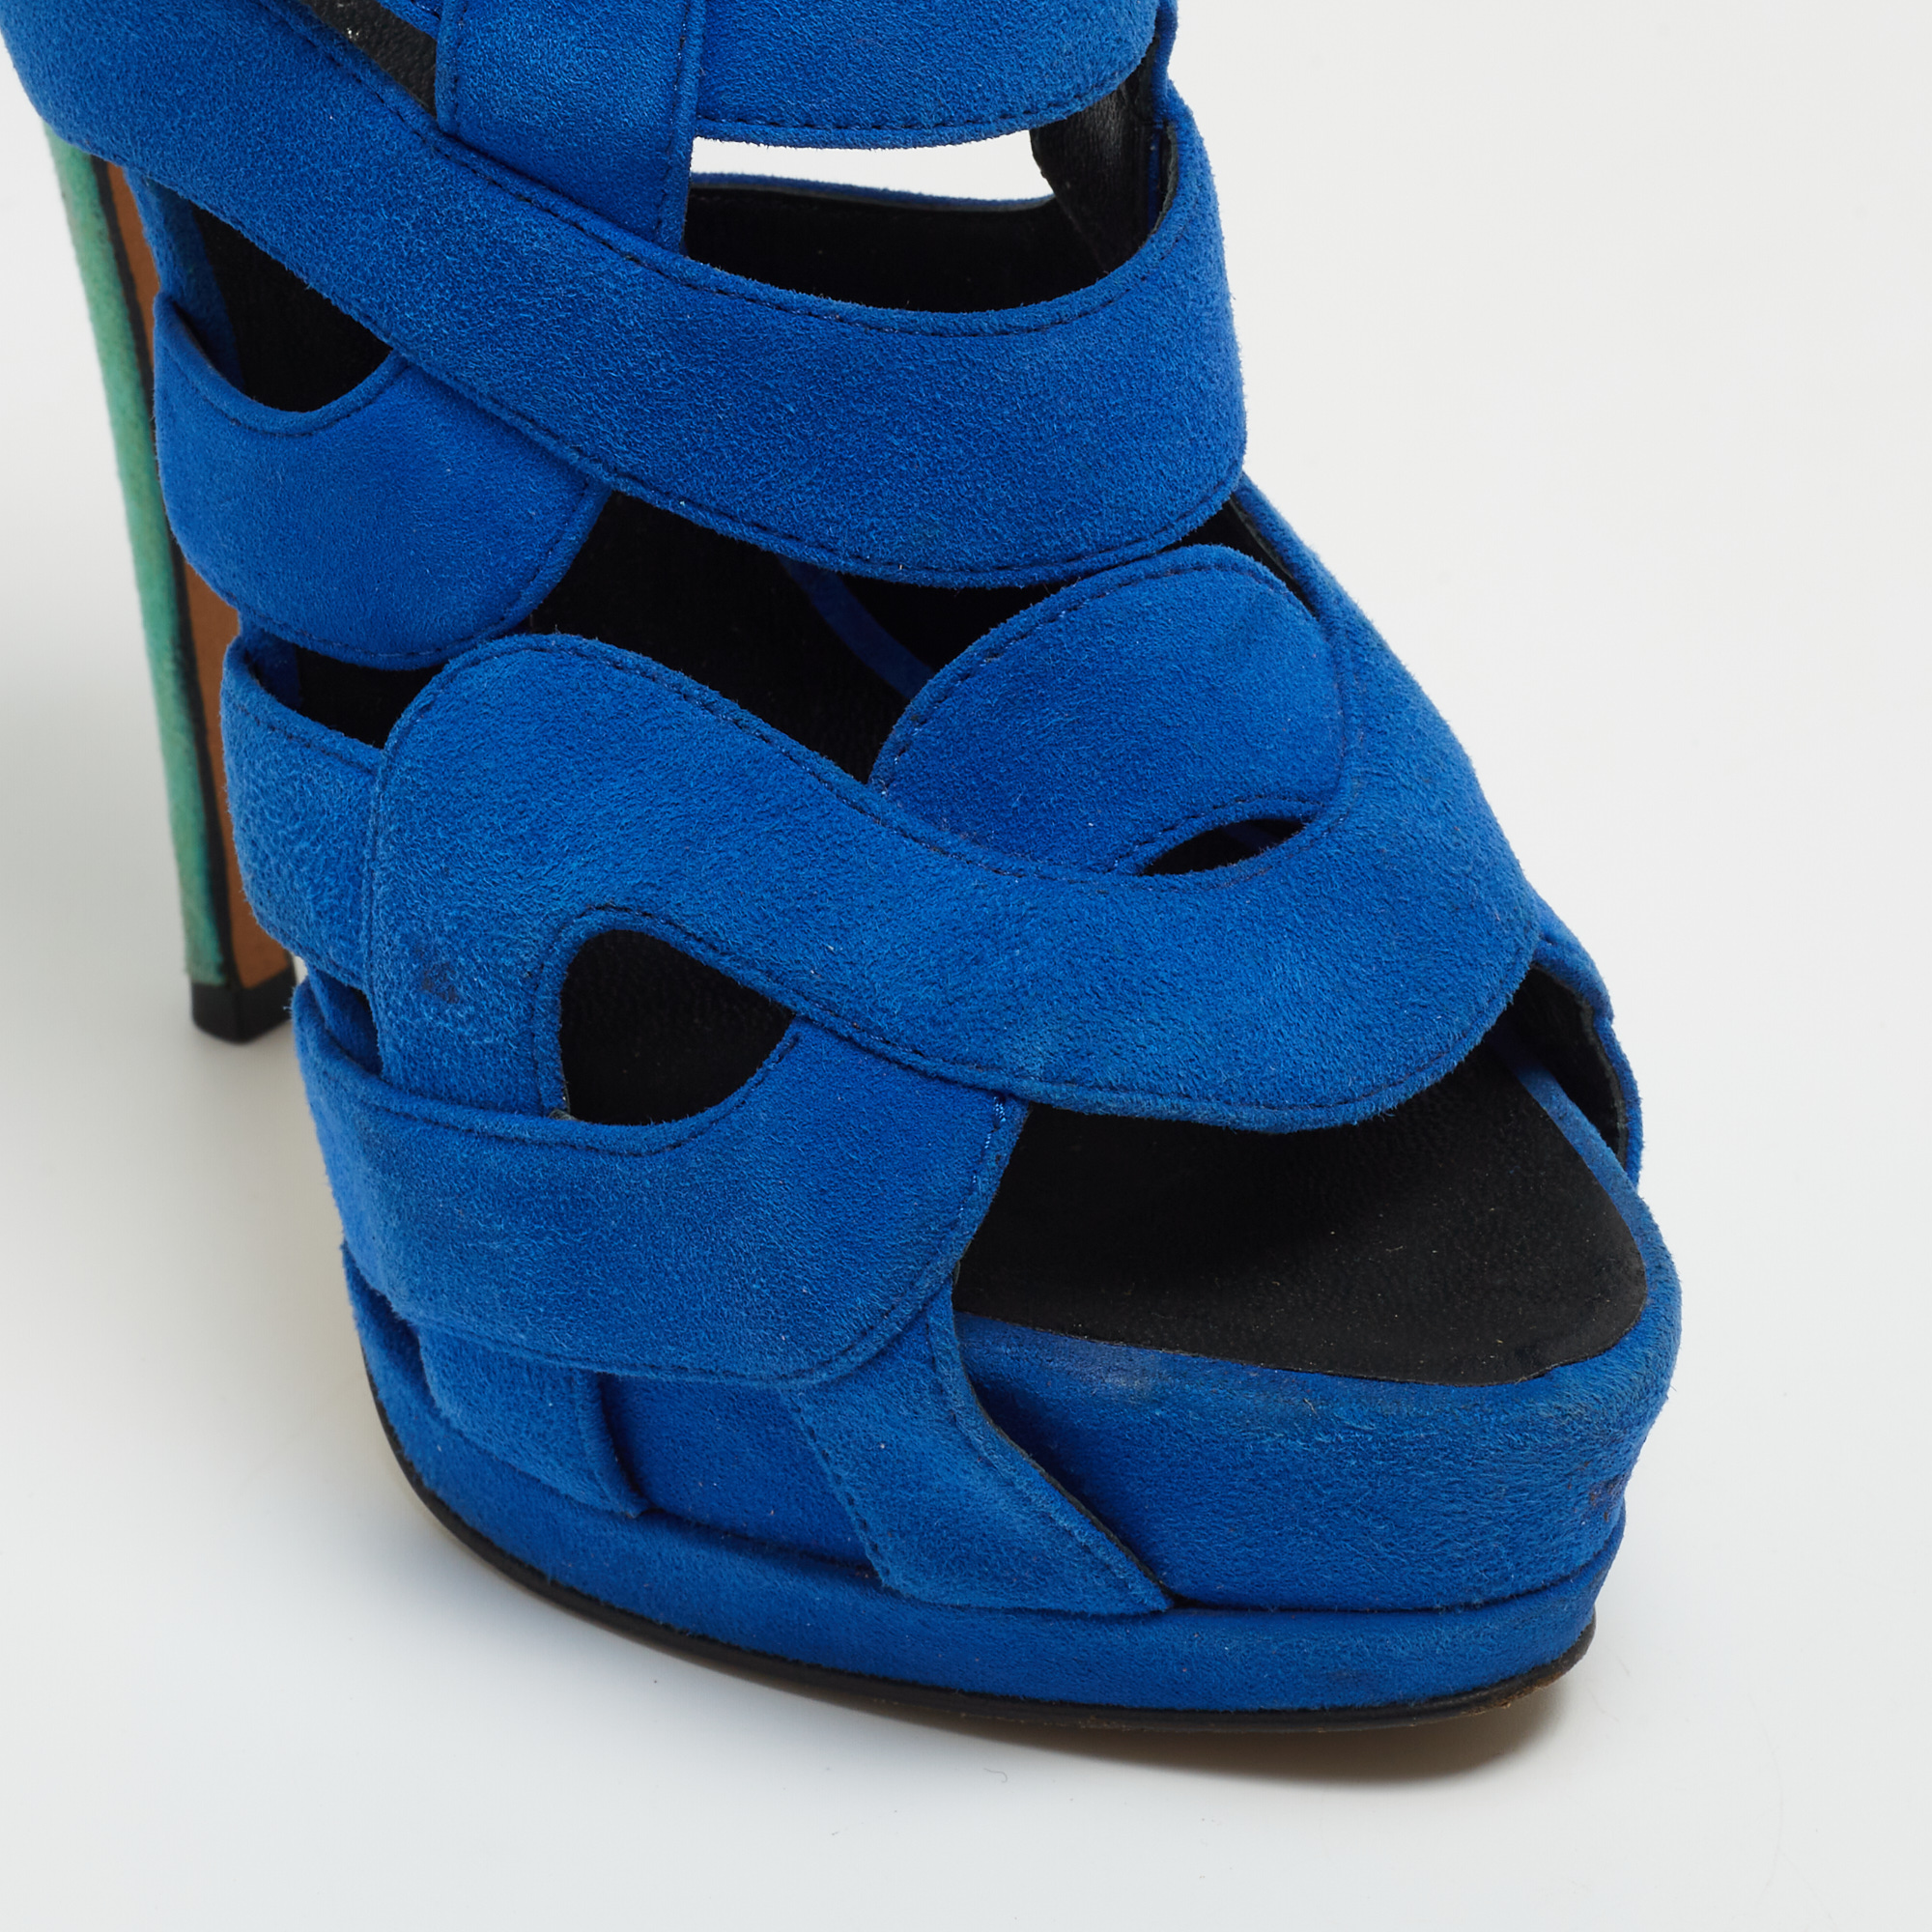 Giuseppe Zanotti Two Tone Suede Cutout Caged Slingback Platform Sandals Size 38.5